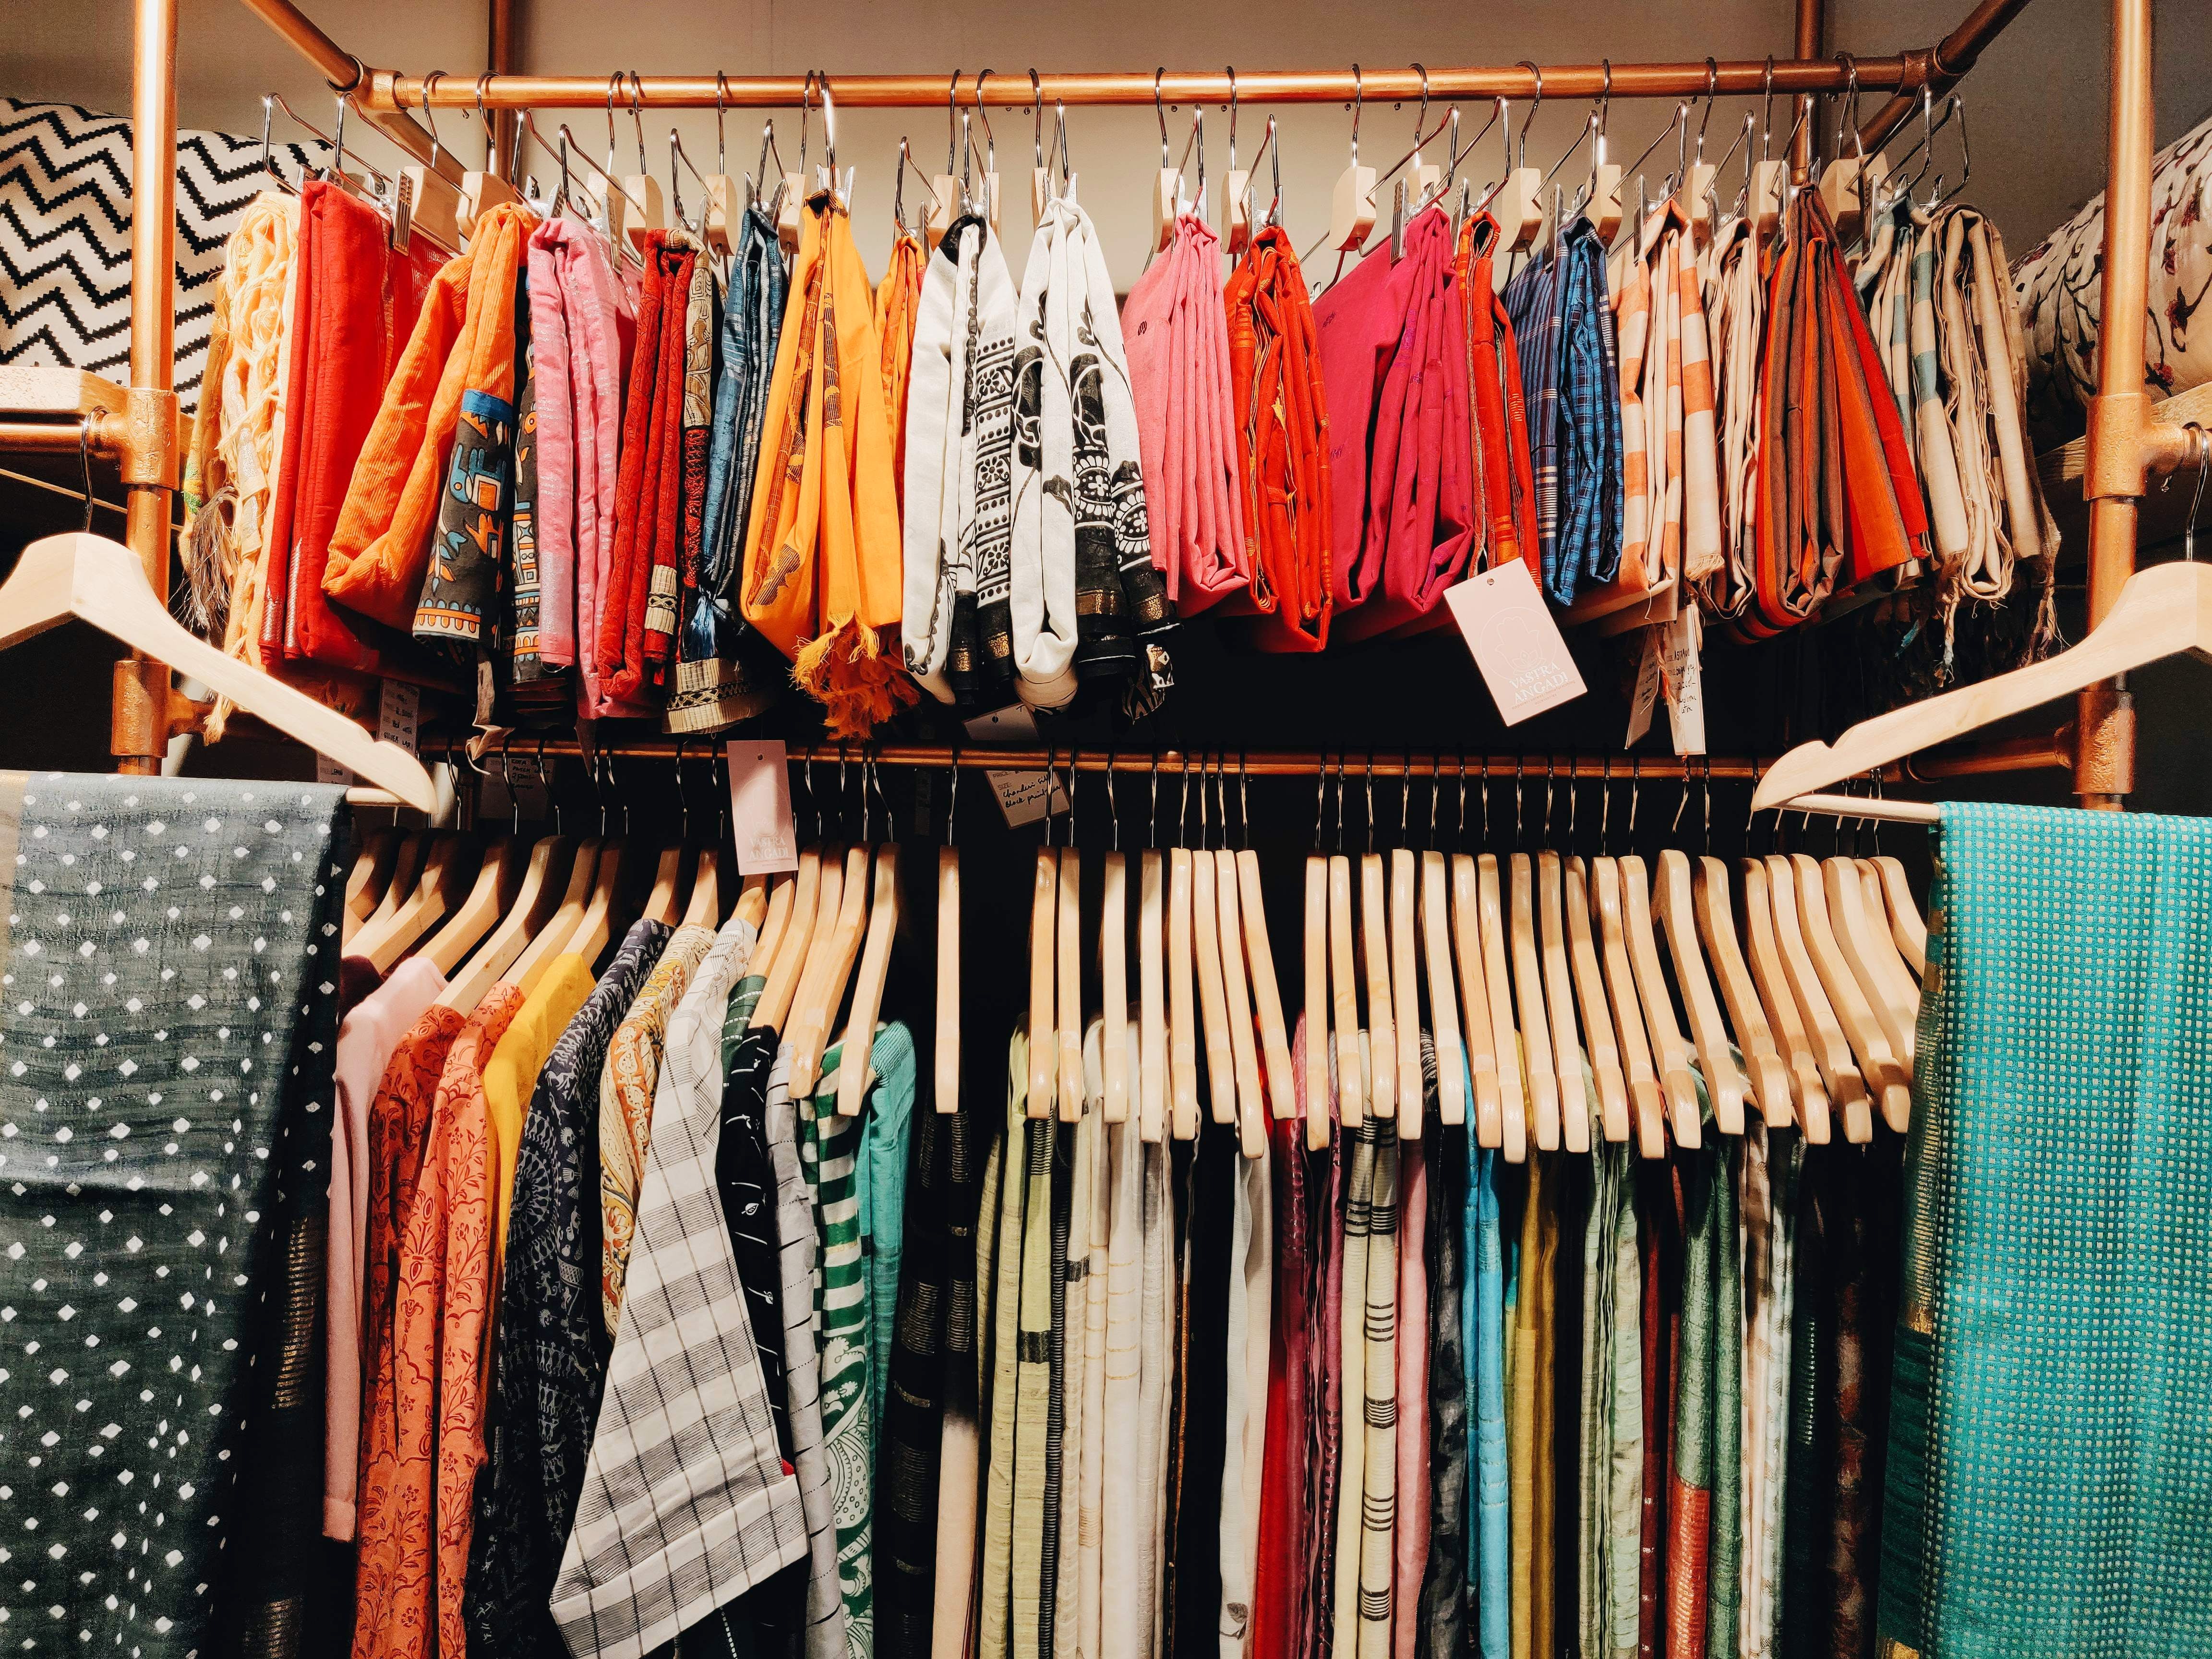 Closet,Boutique,Room,Clothes hanger,Wardrobe,Textile,Outlet store,Collection,Furniture,Vintage clothing